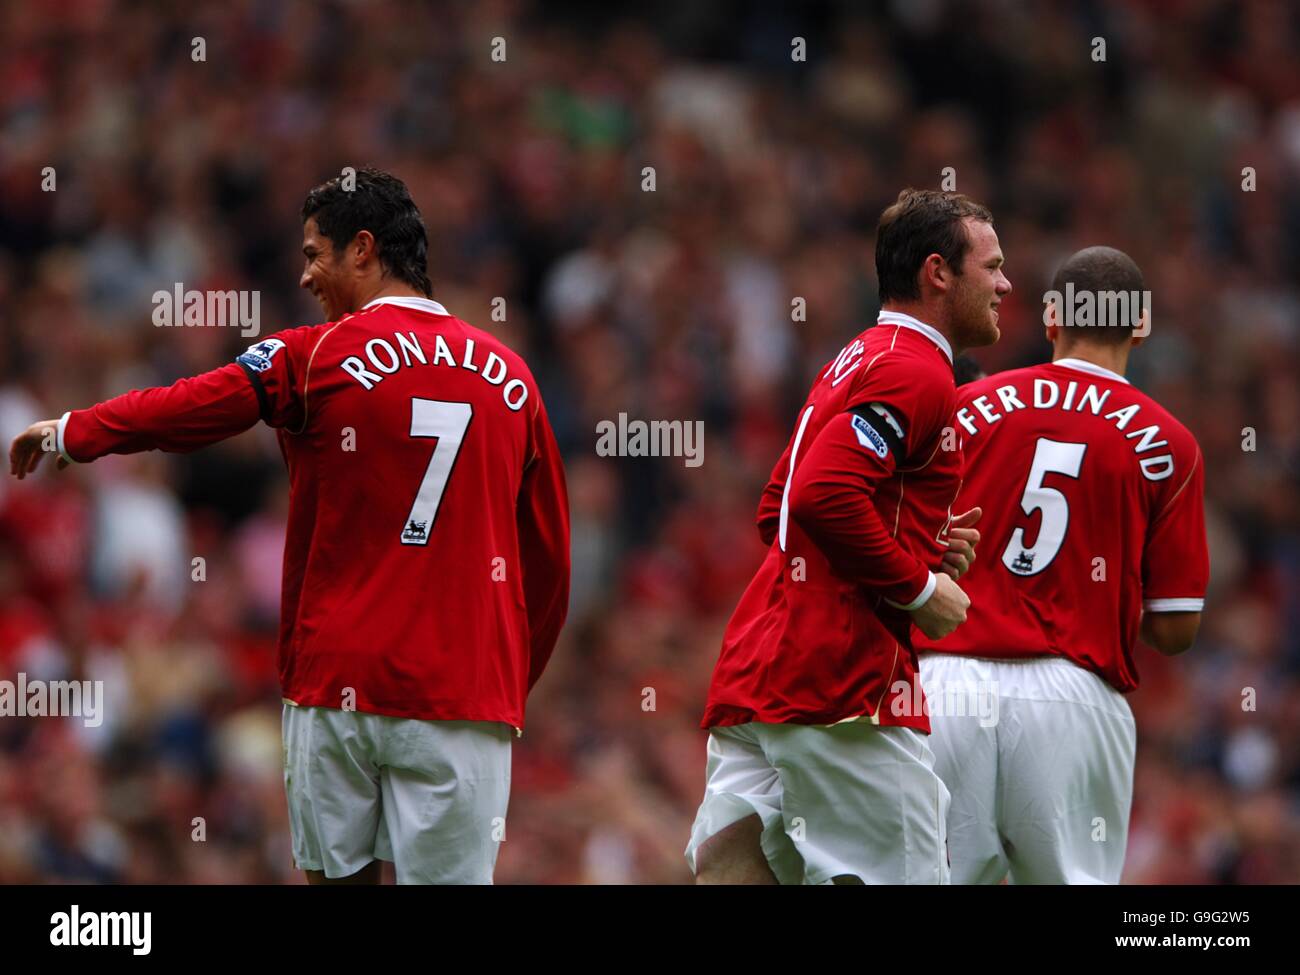 📸 Berbatov & Ronaldo & Wayne Rooney 🔥🔥💪 #dimitarberbatov